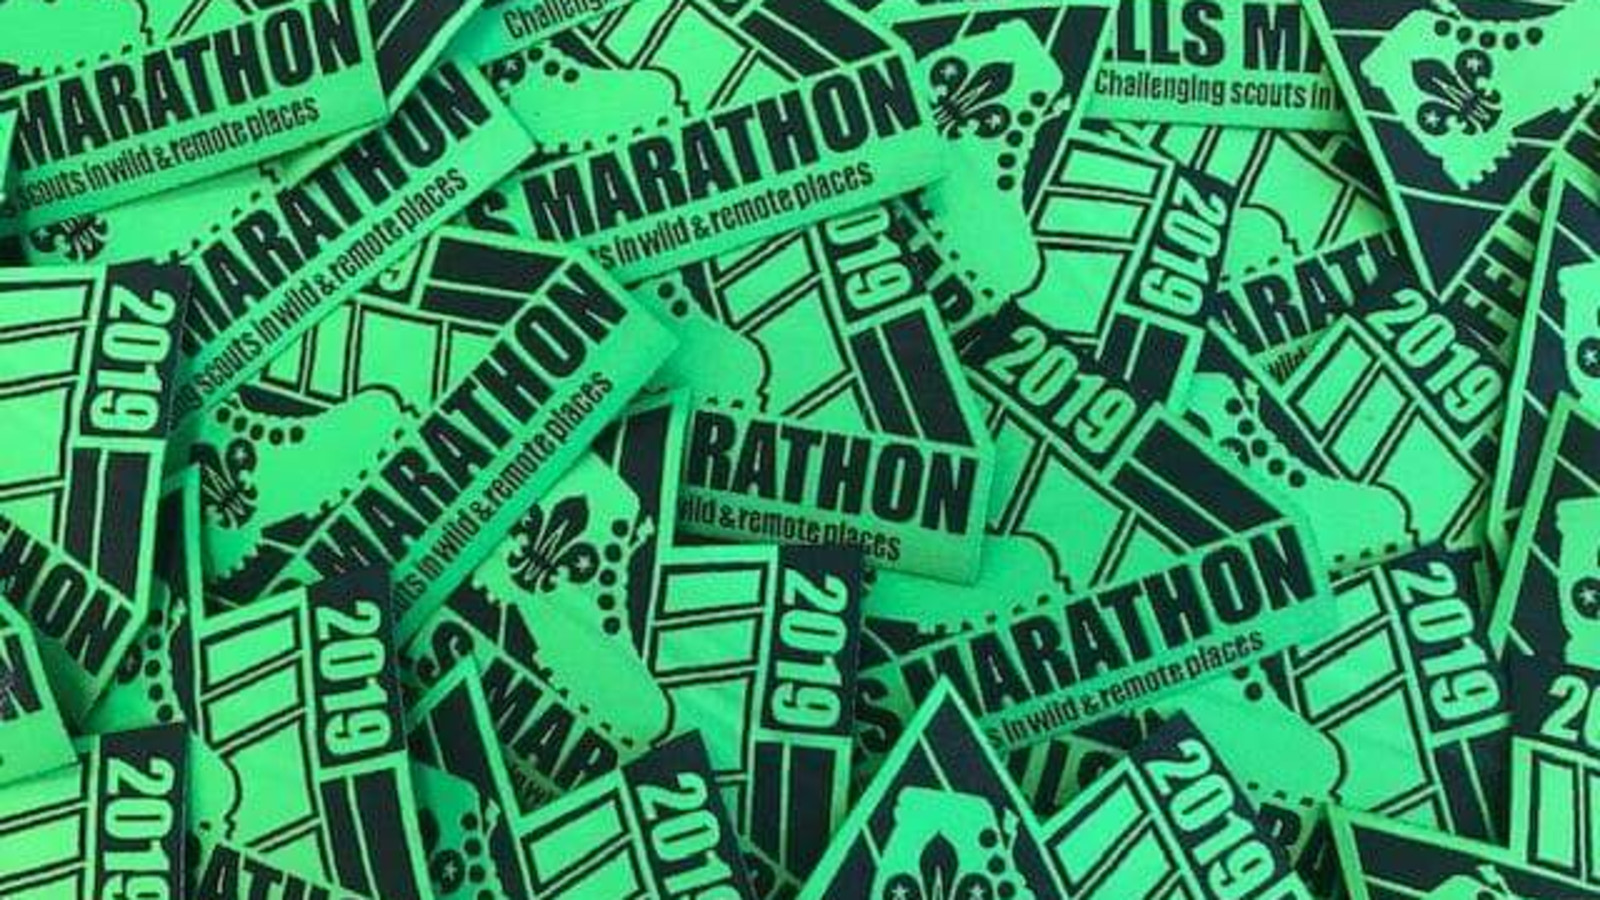 Fells Marathon Badges